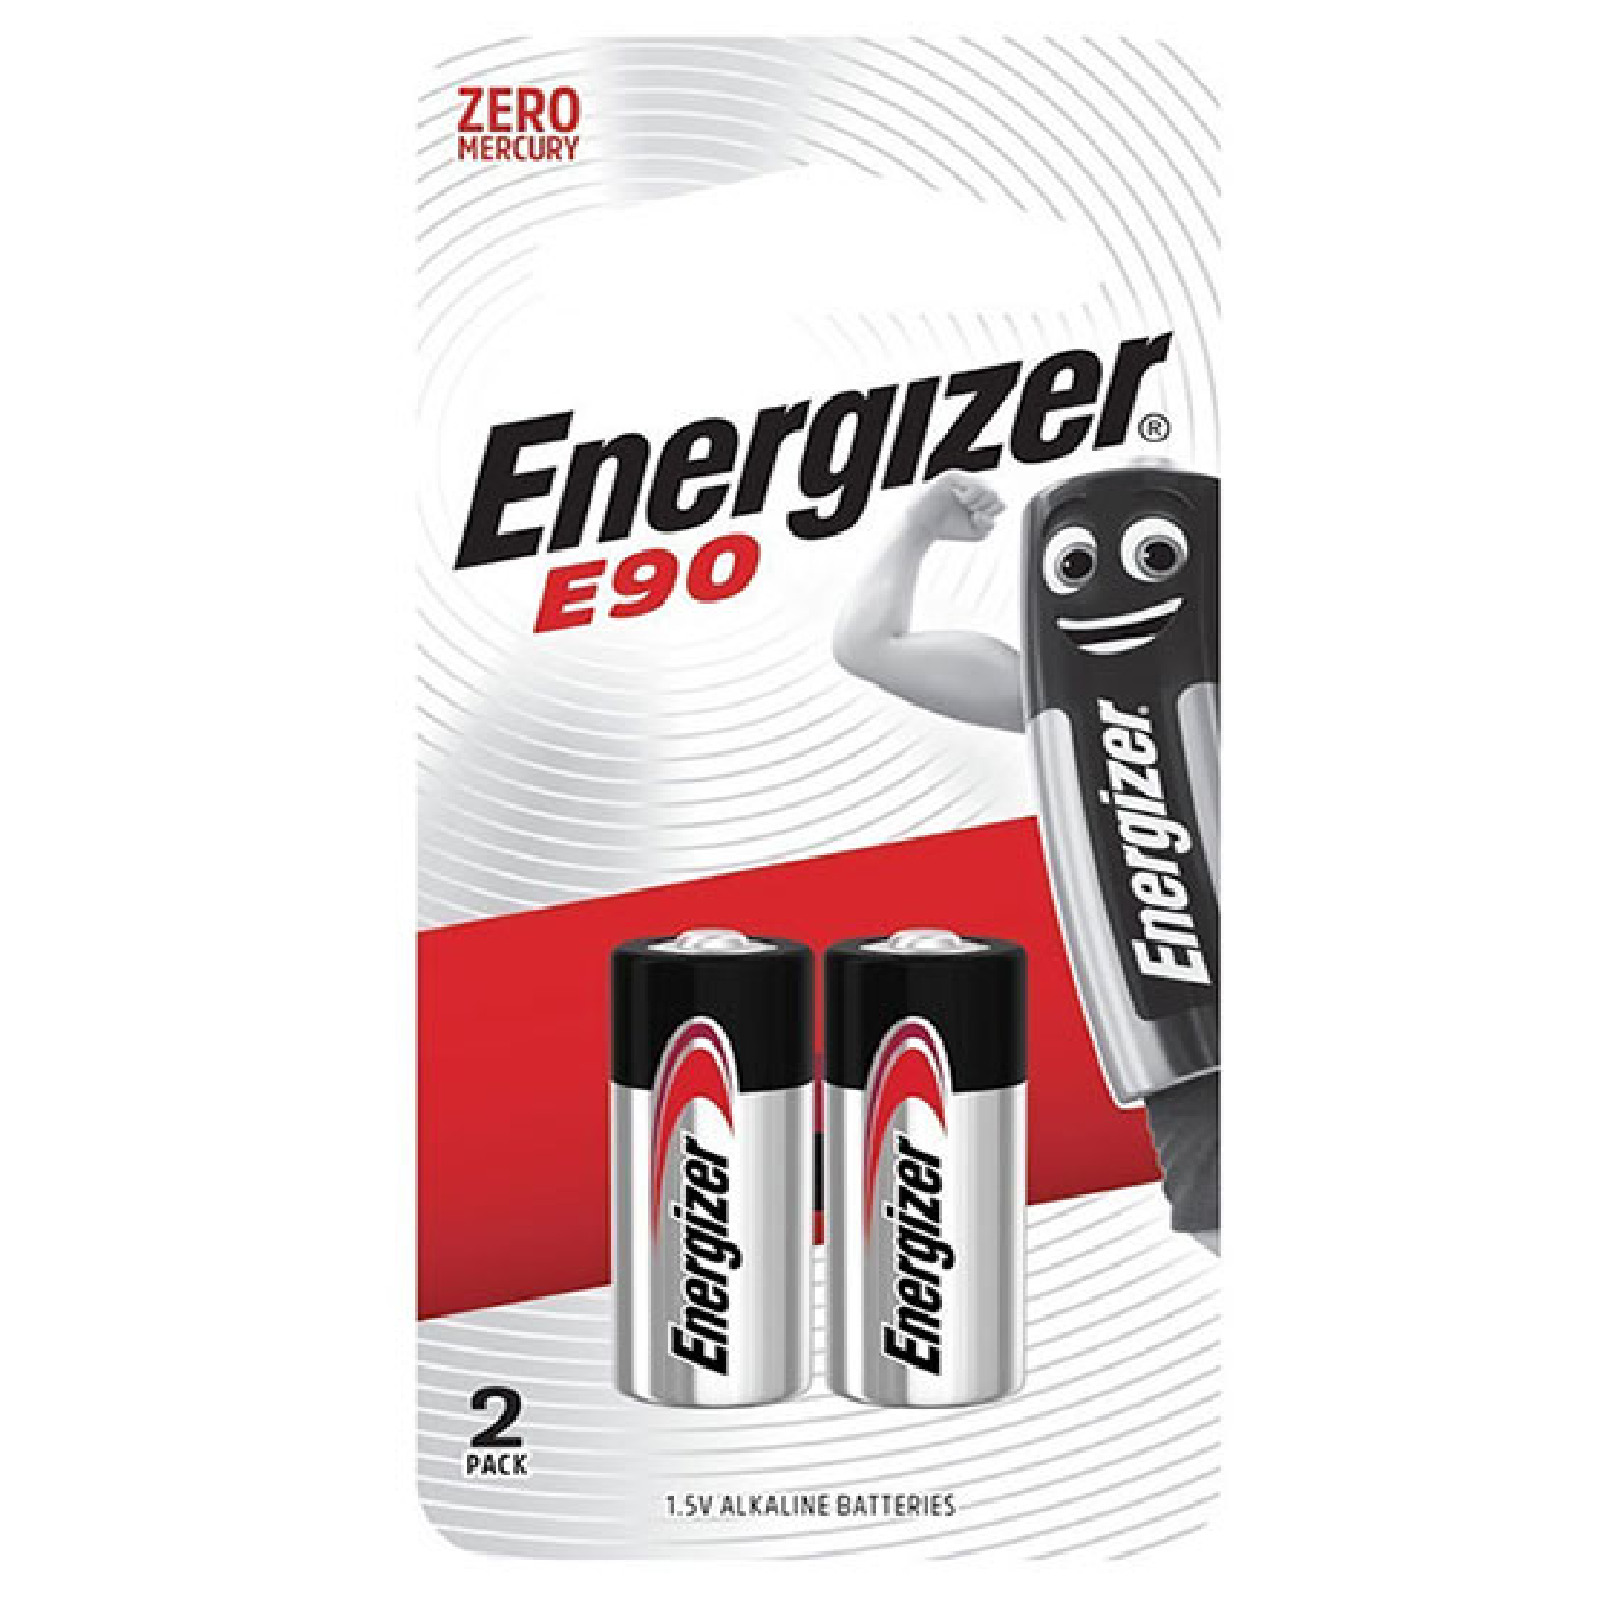 Energizer E90 Miniature Alkaline Battery 2PC/Pack